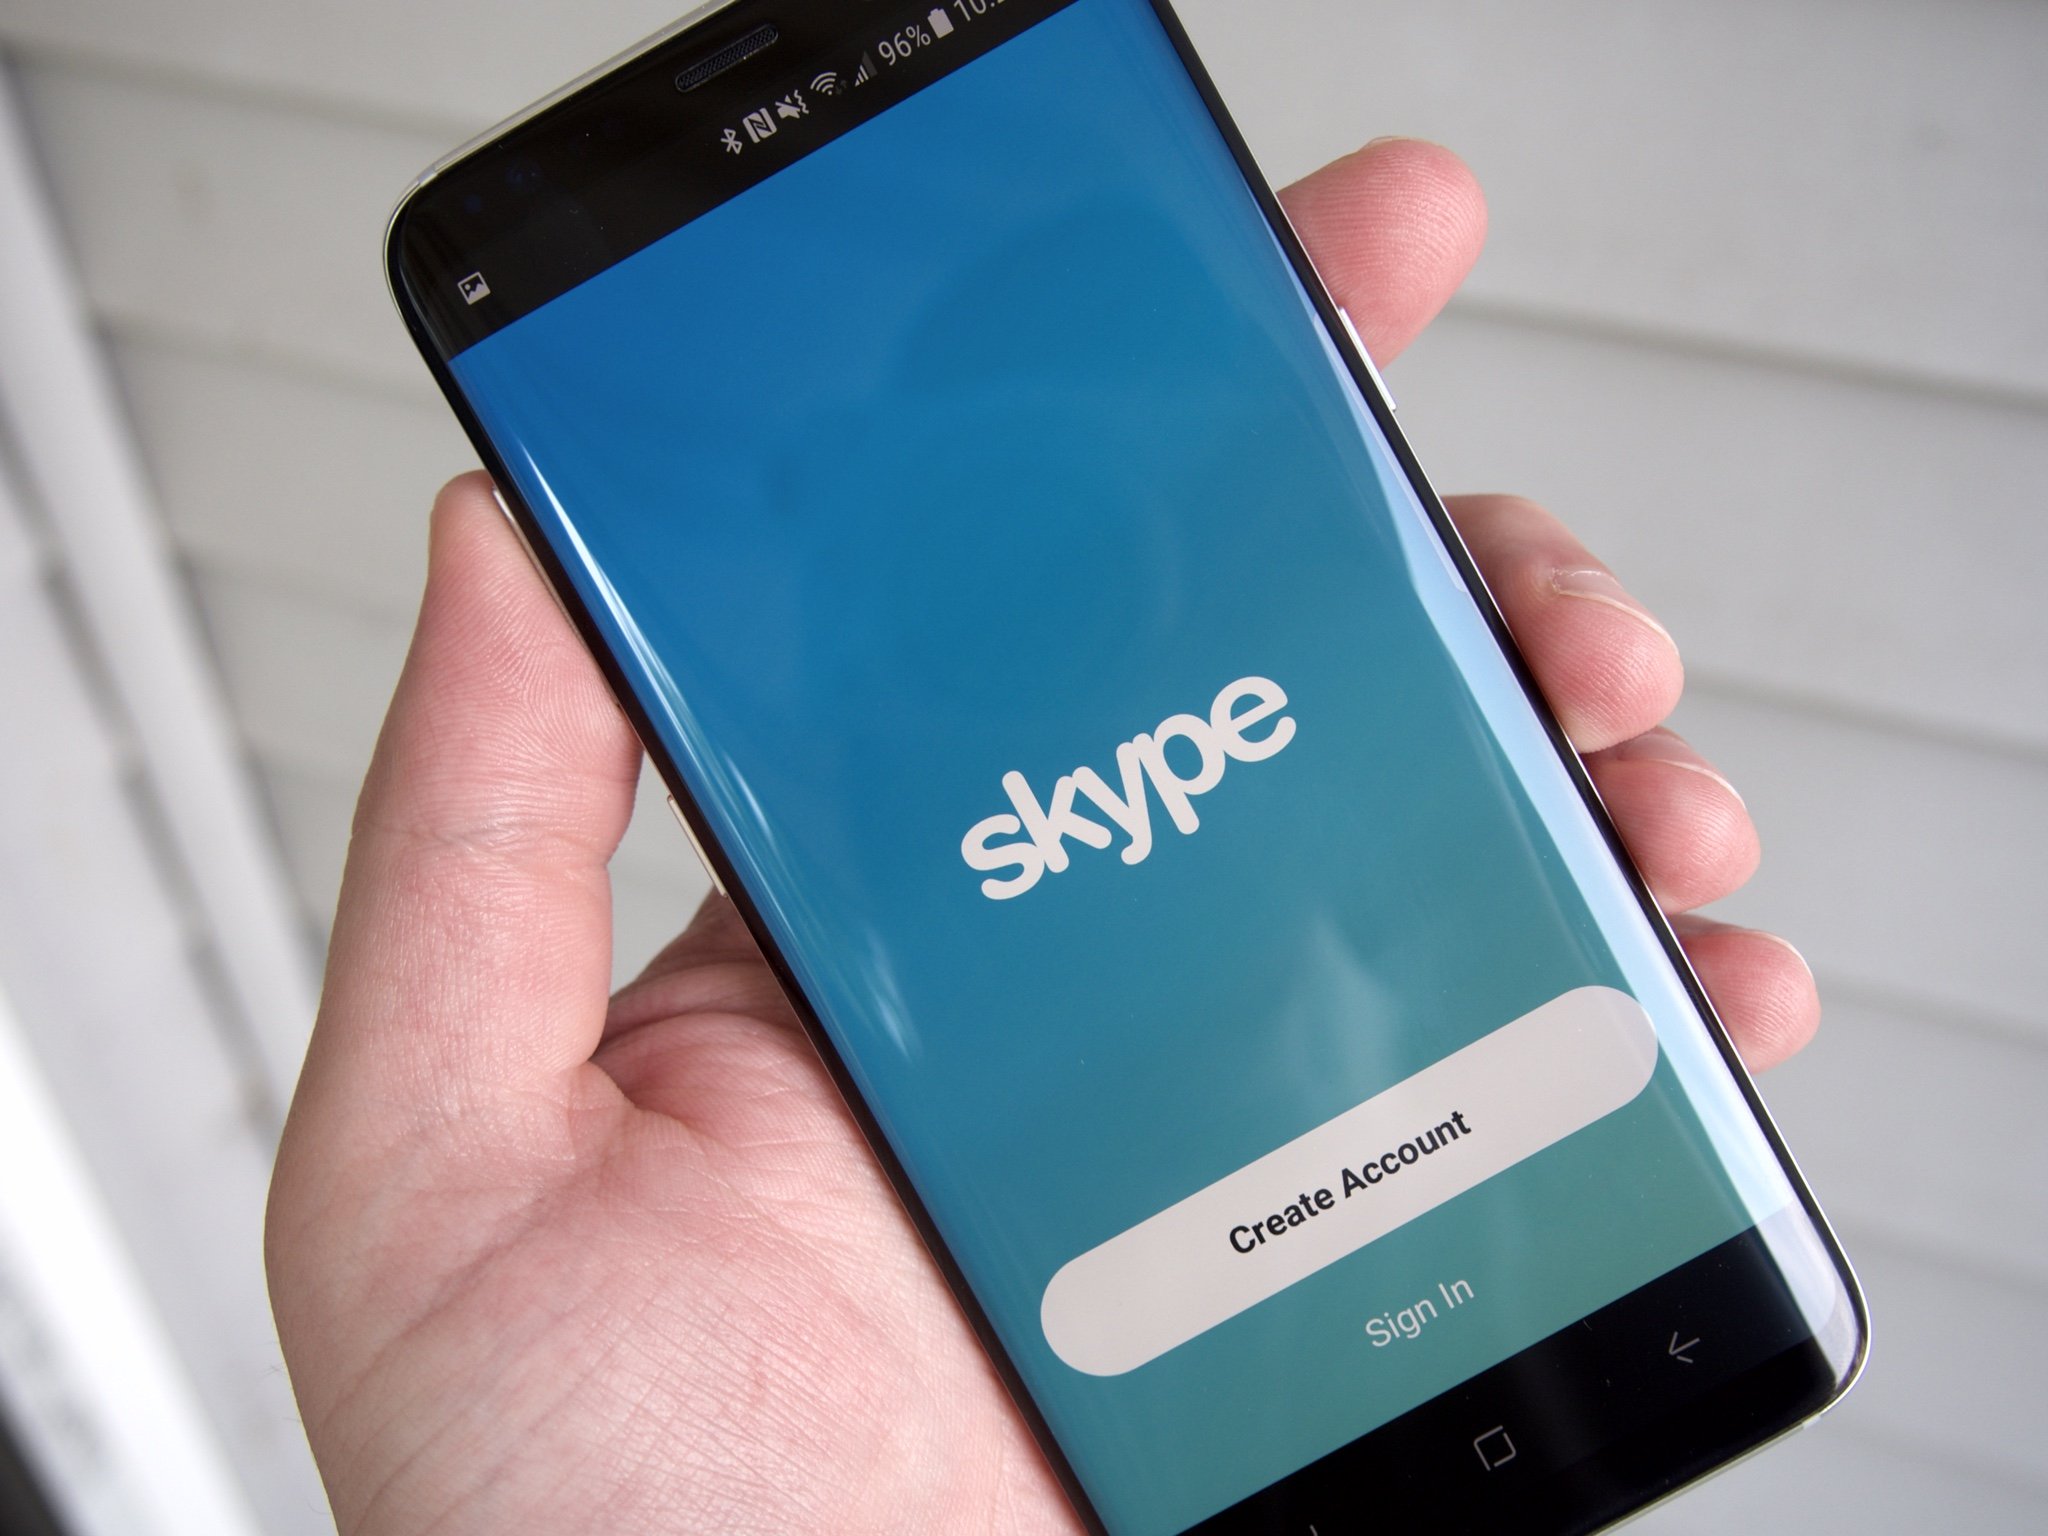 skype-splash-android-gs8.jpg?itok=oTLUR4